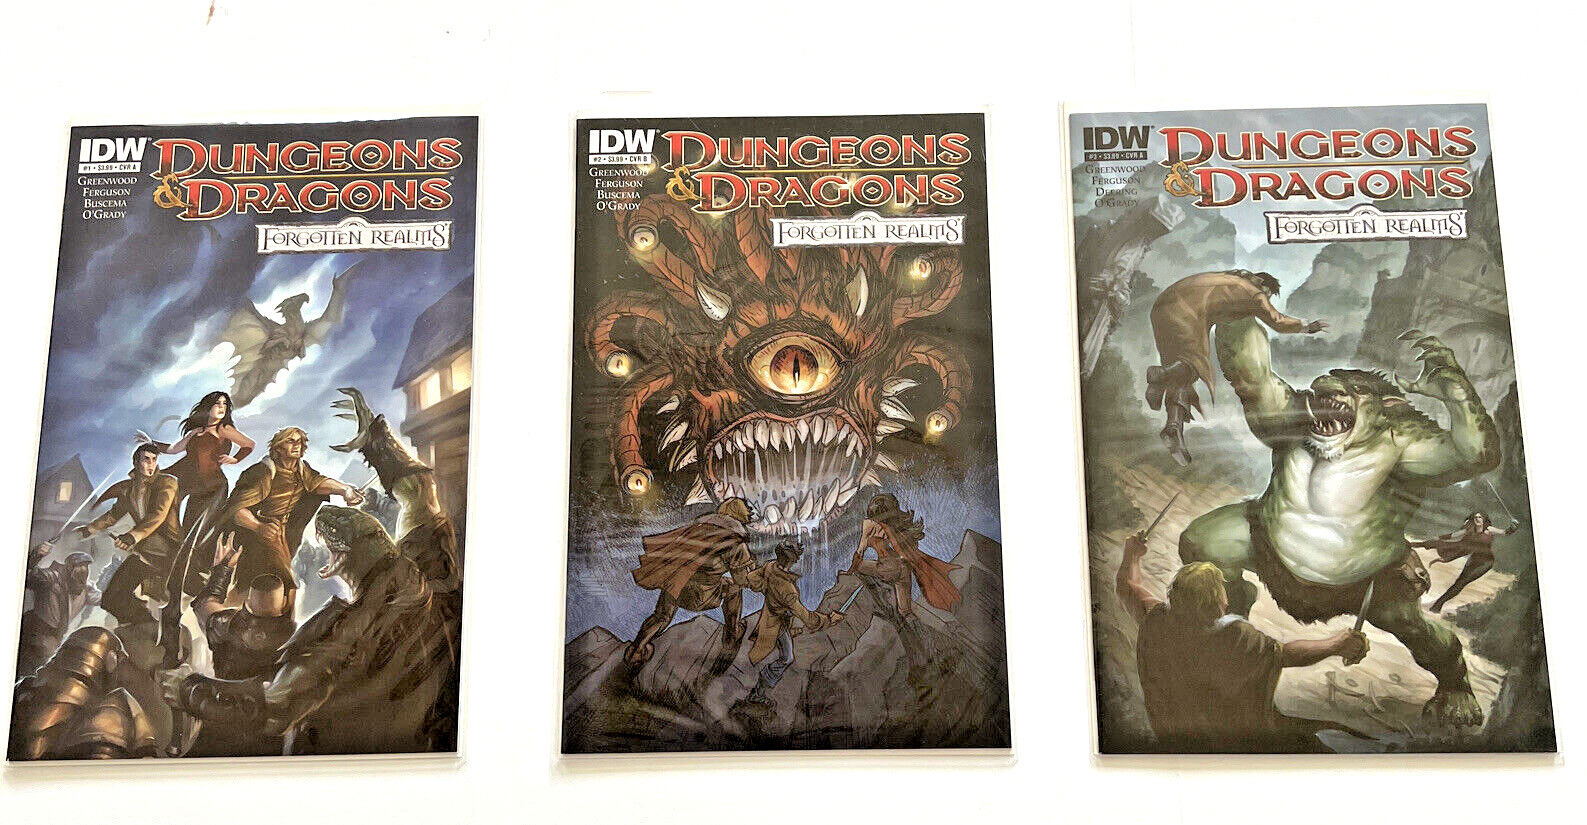 Dungeons & Dragons #1-3 Comic Lot (IDW Publishing, November 2012)